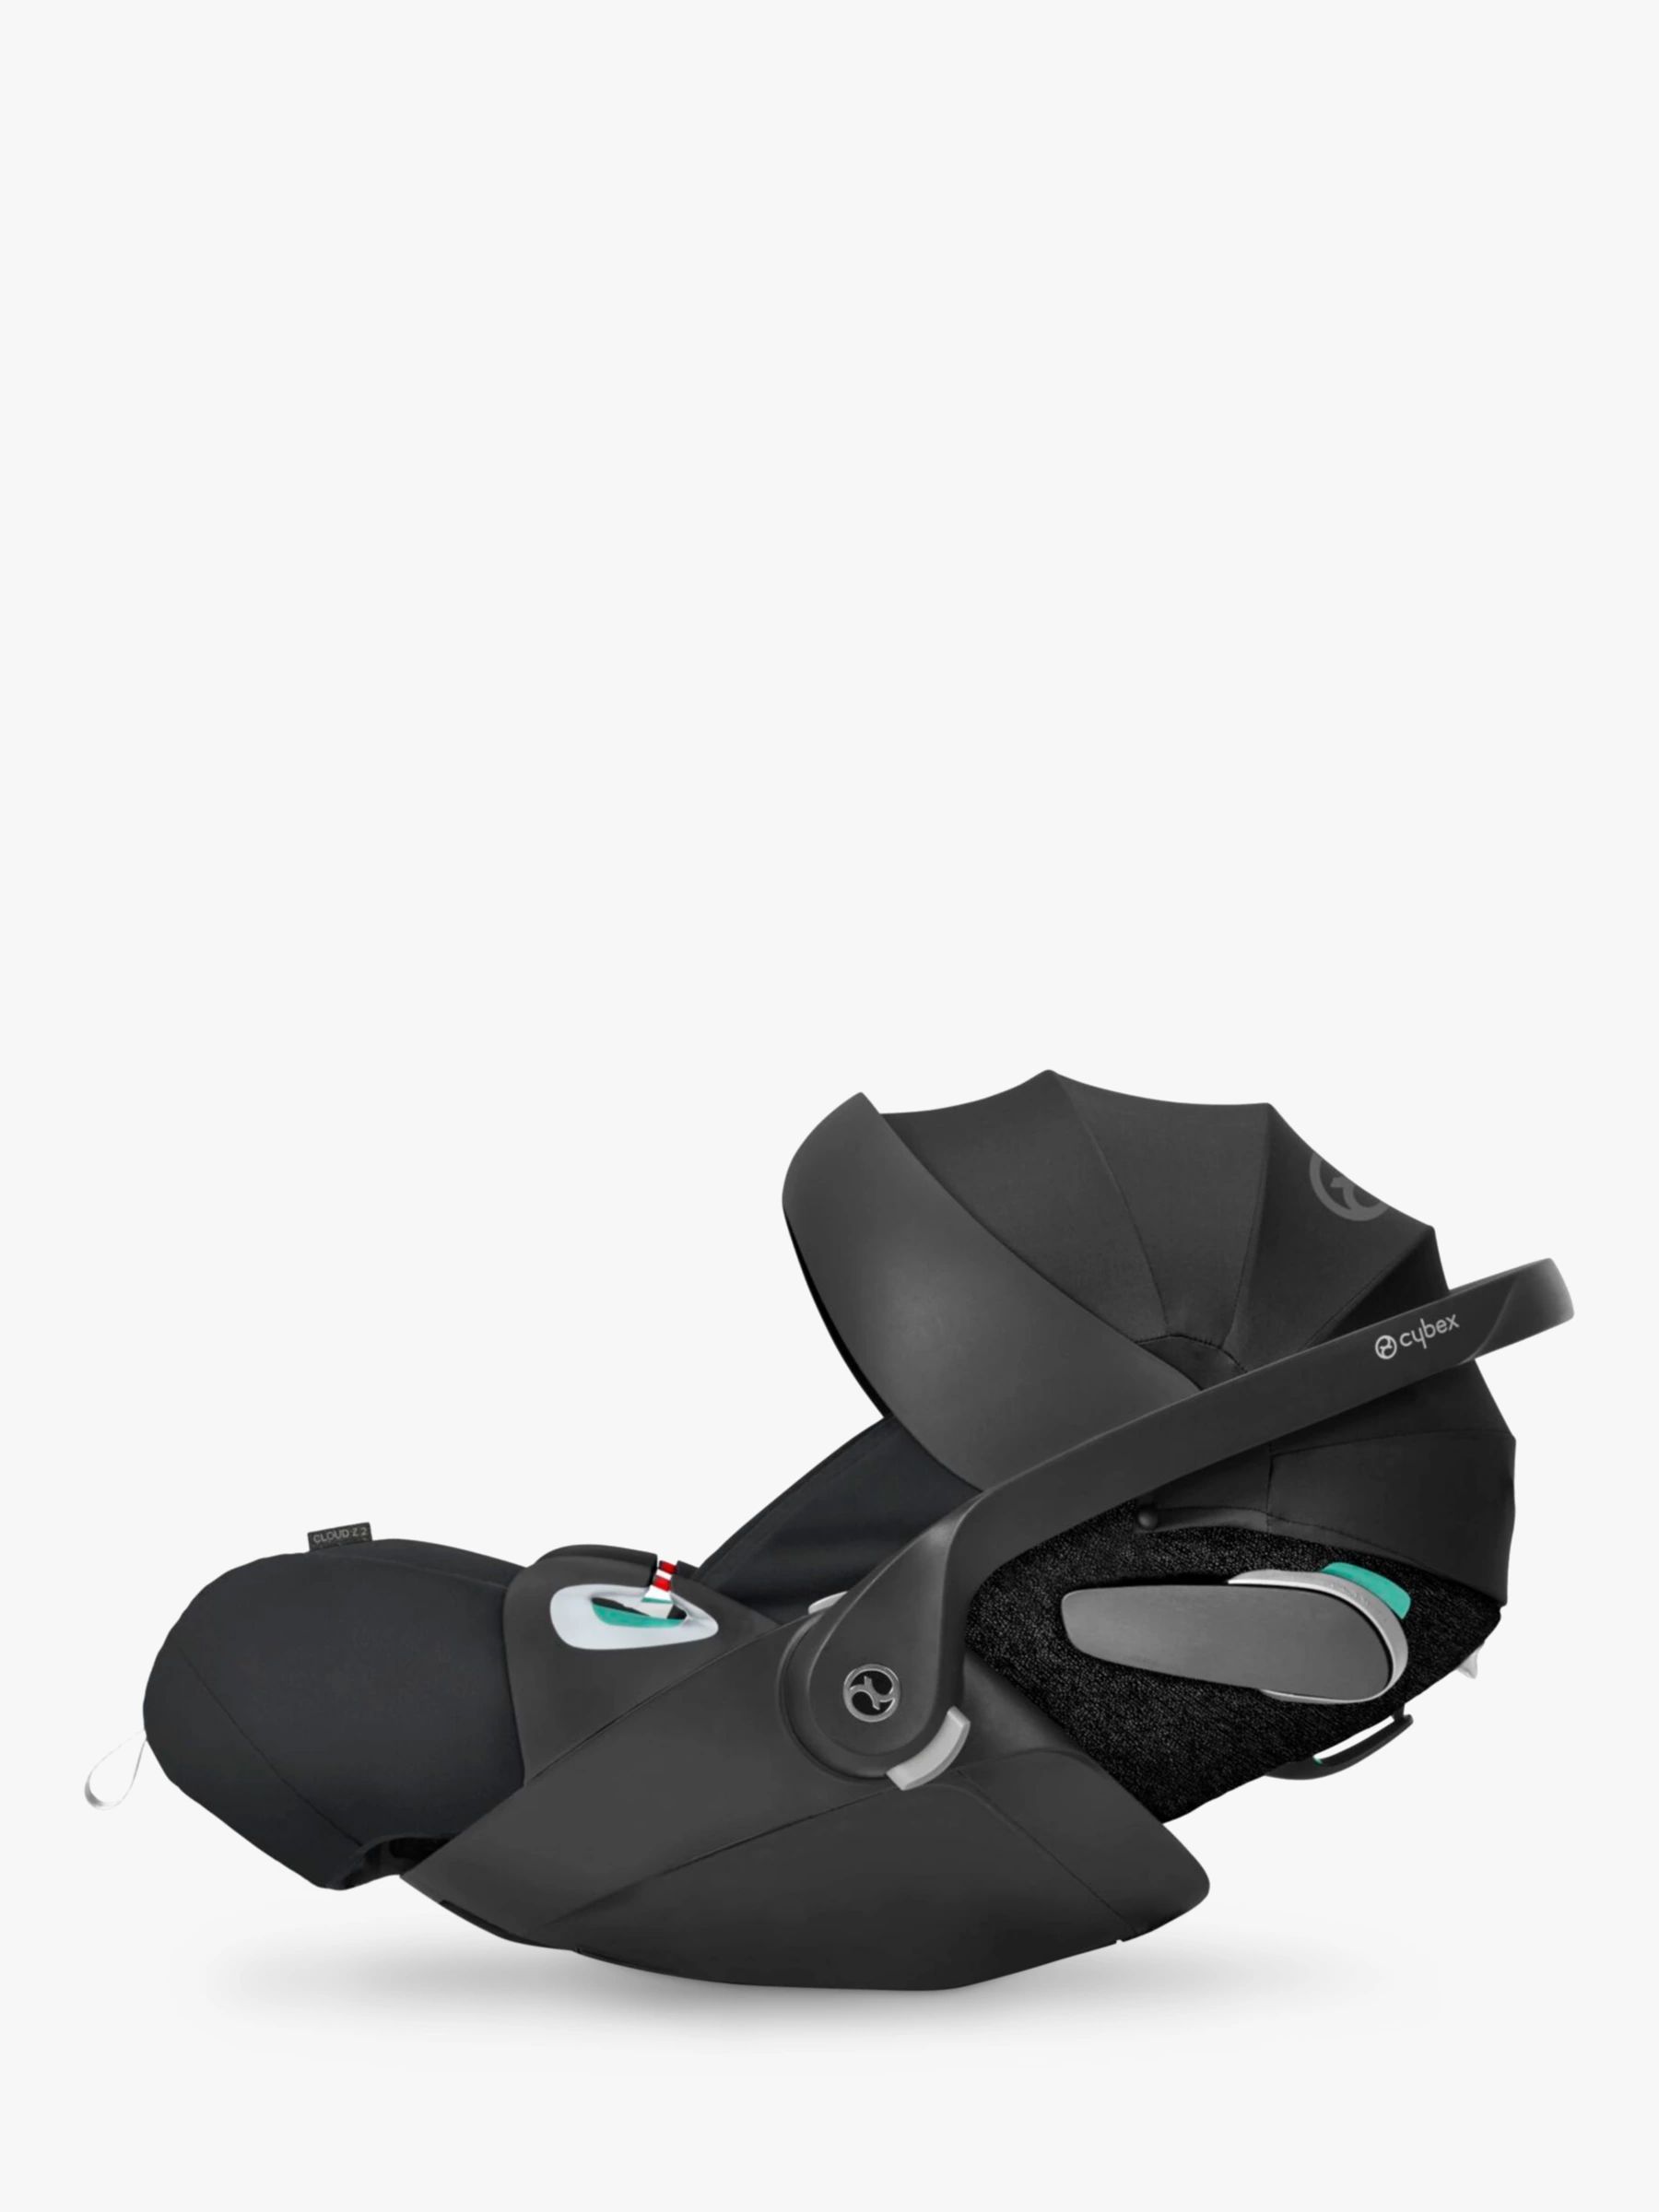 Cybex Cloud Z2 Rotating Baby Car Seat, Deep Black | John Lewis (UK)